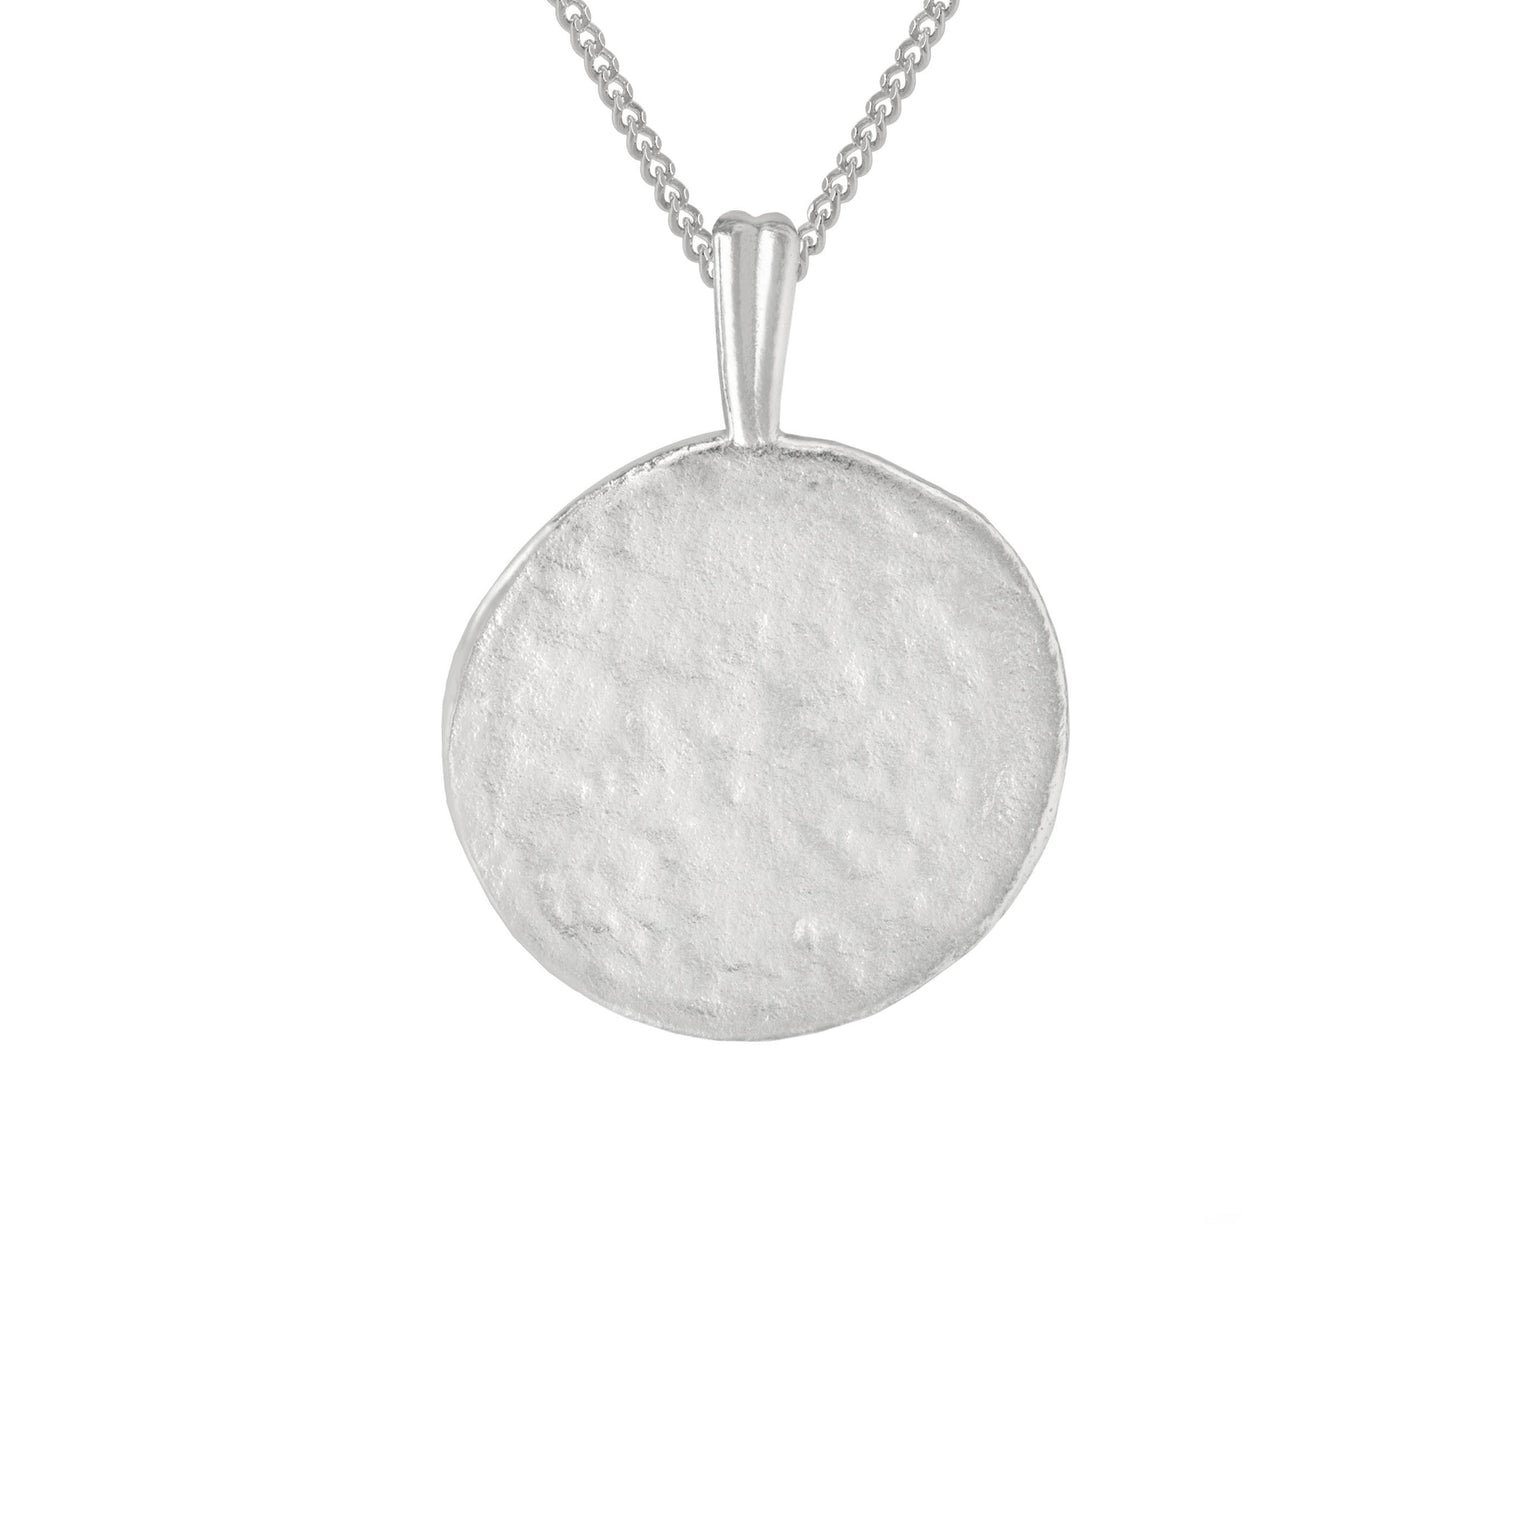 Leo Zodiac Pendant Necklace in Silver back of pendant